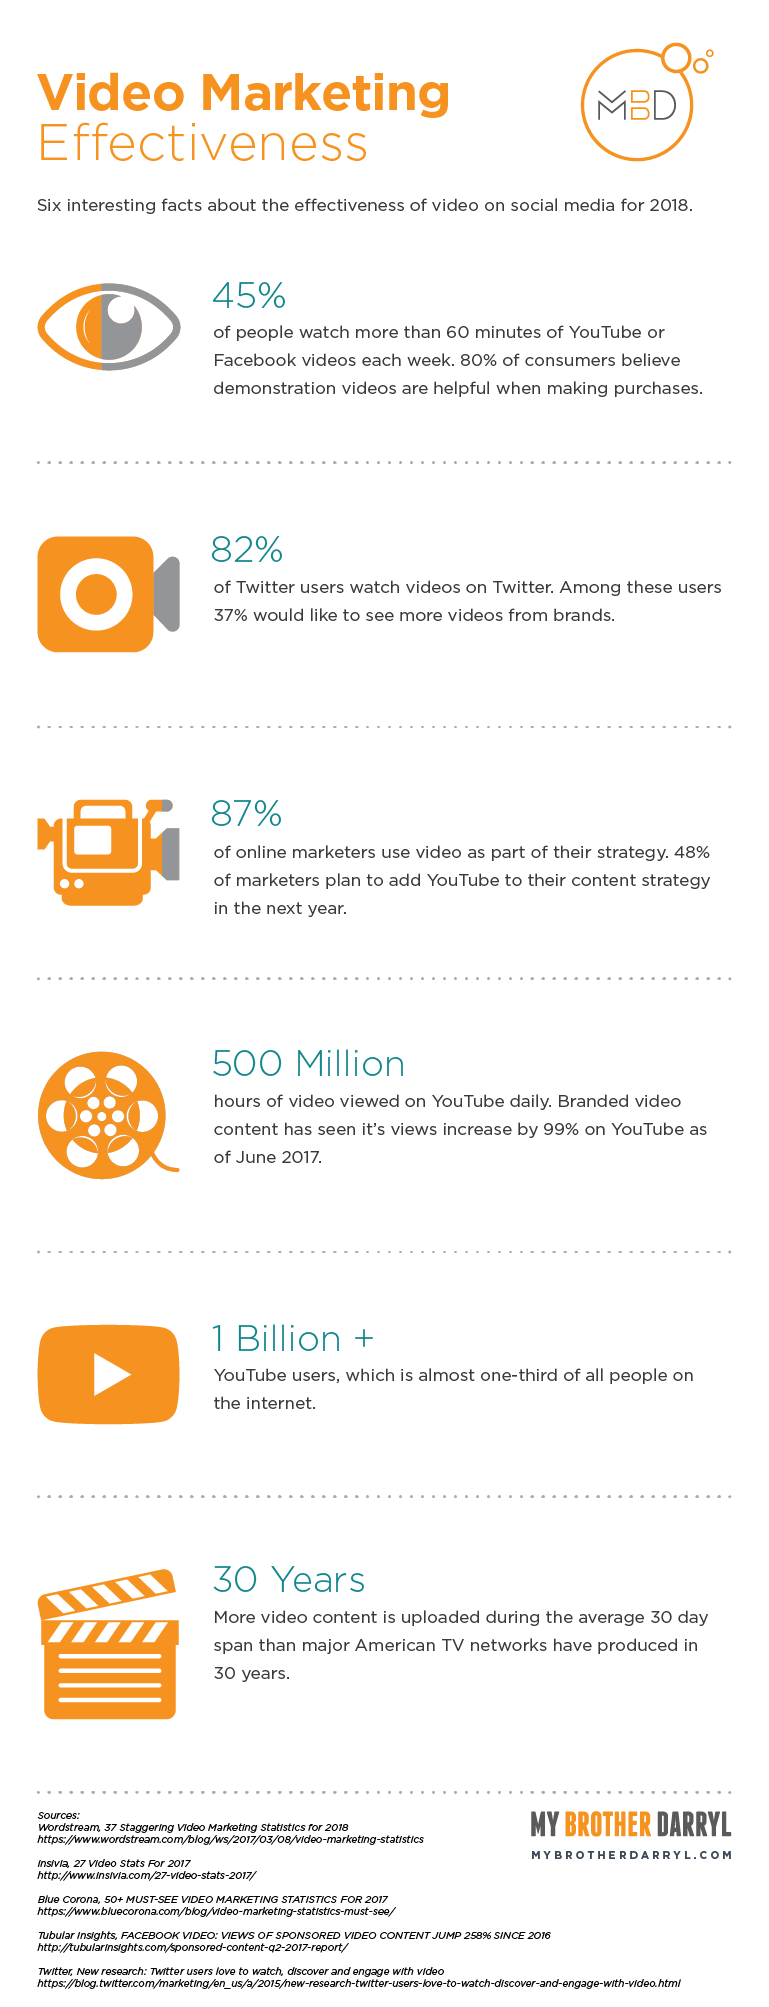 video marketing effectiveness infographic - full text alternative below image